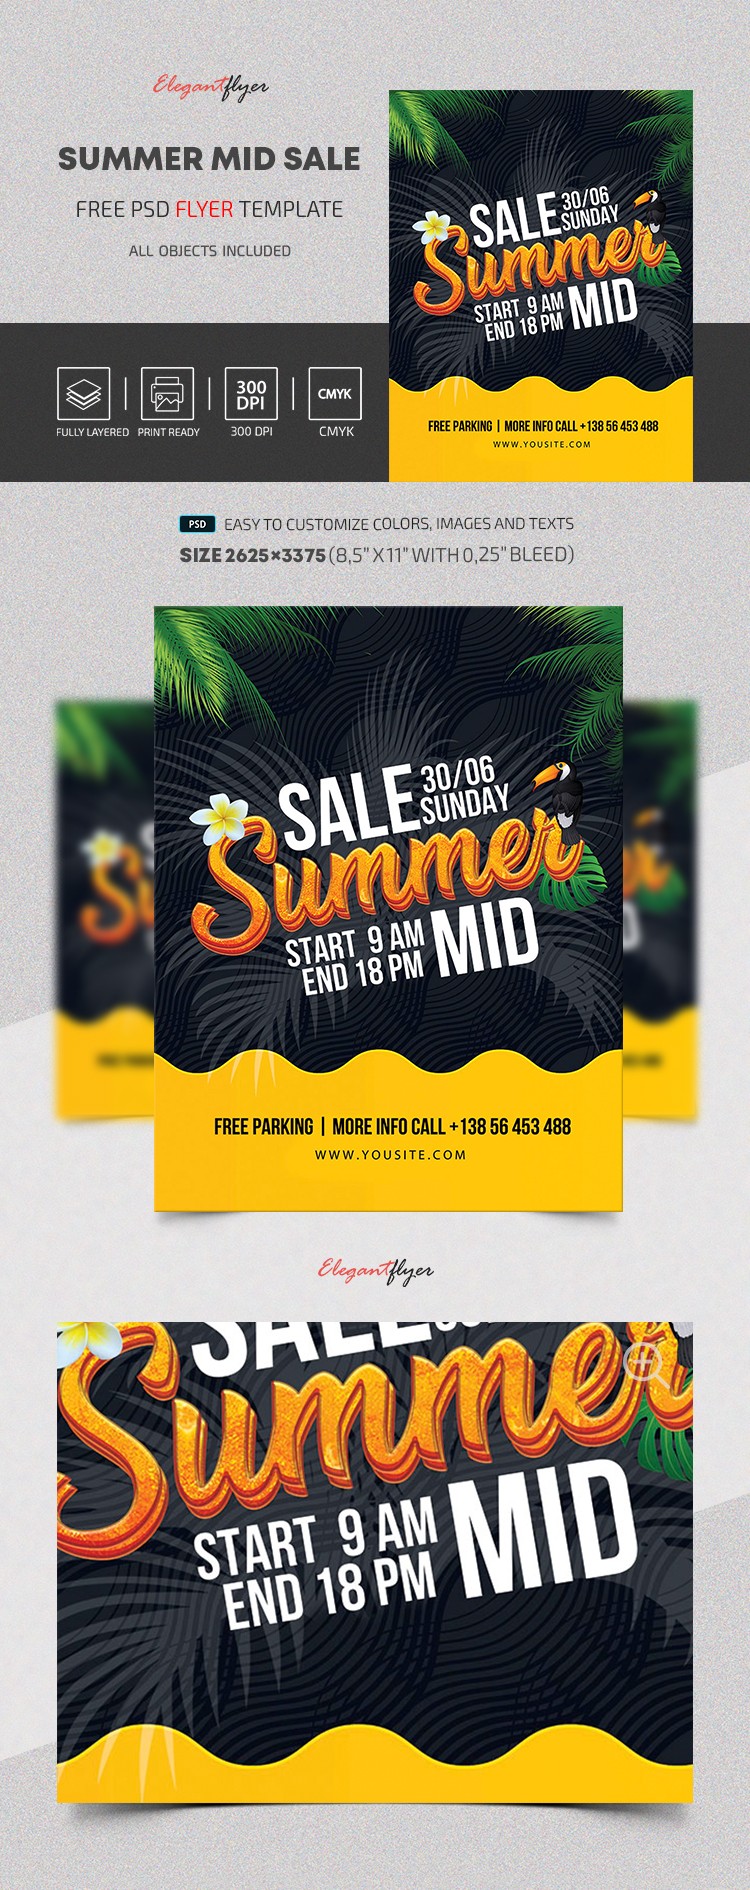 Summer Mid Sale by ElegantFlyer